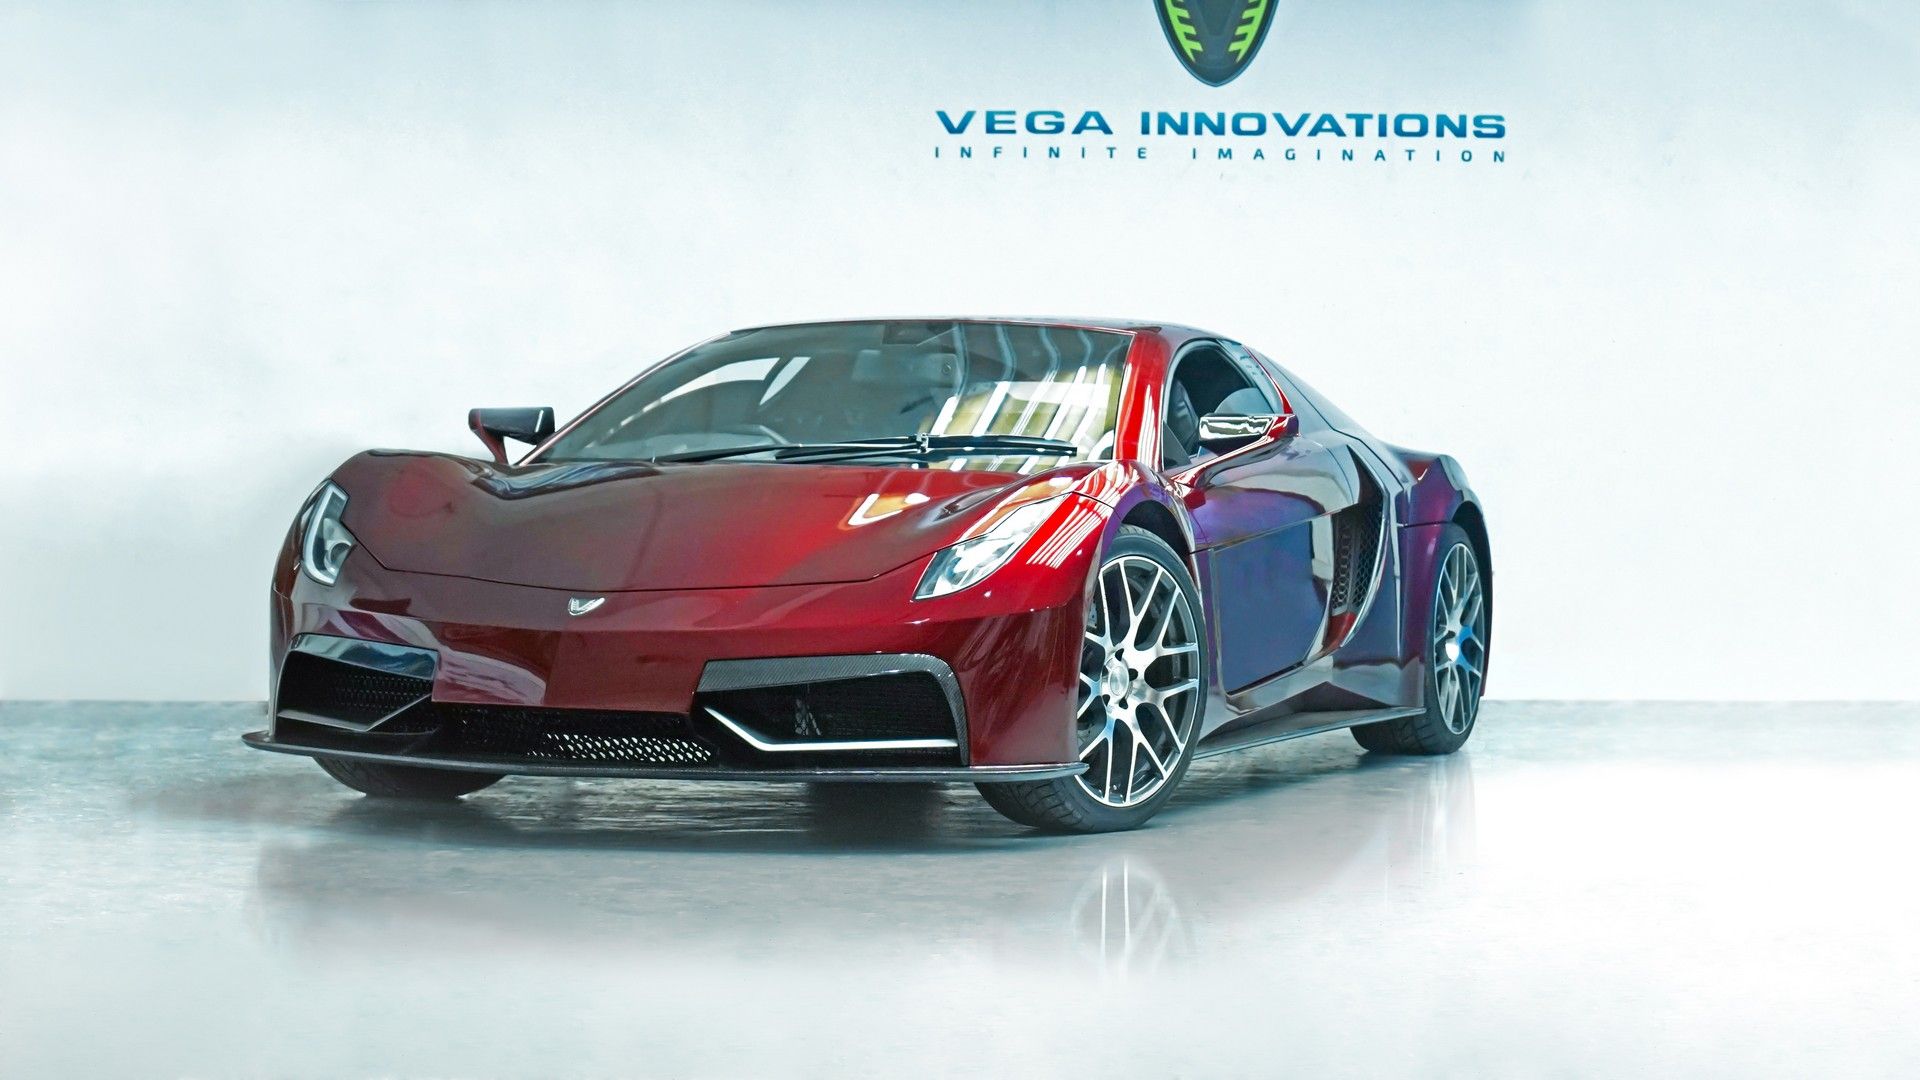 Vega Supercar Evx Wallpapers